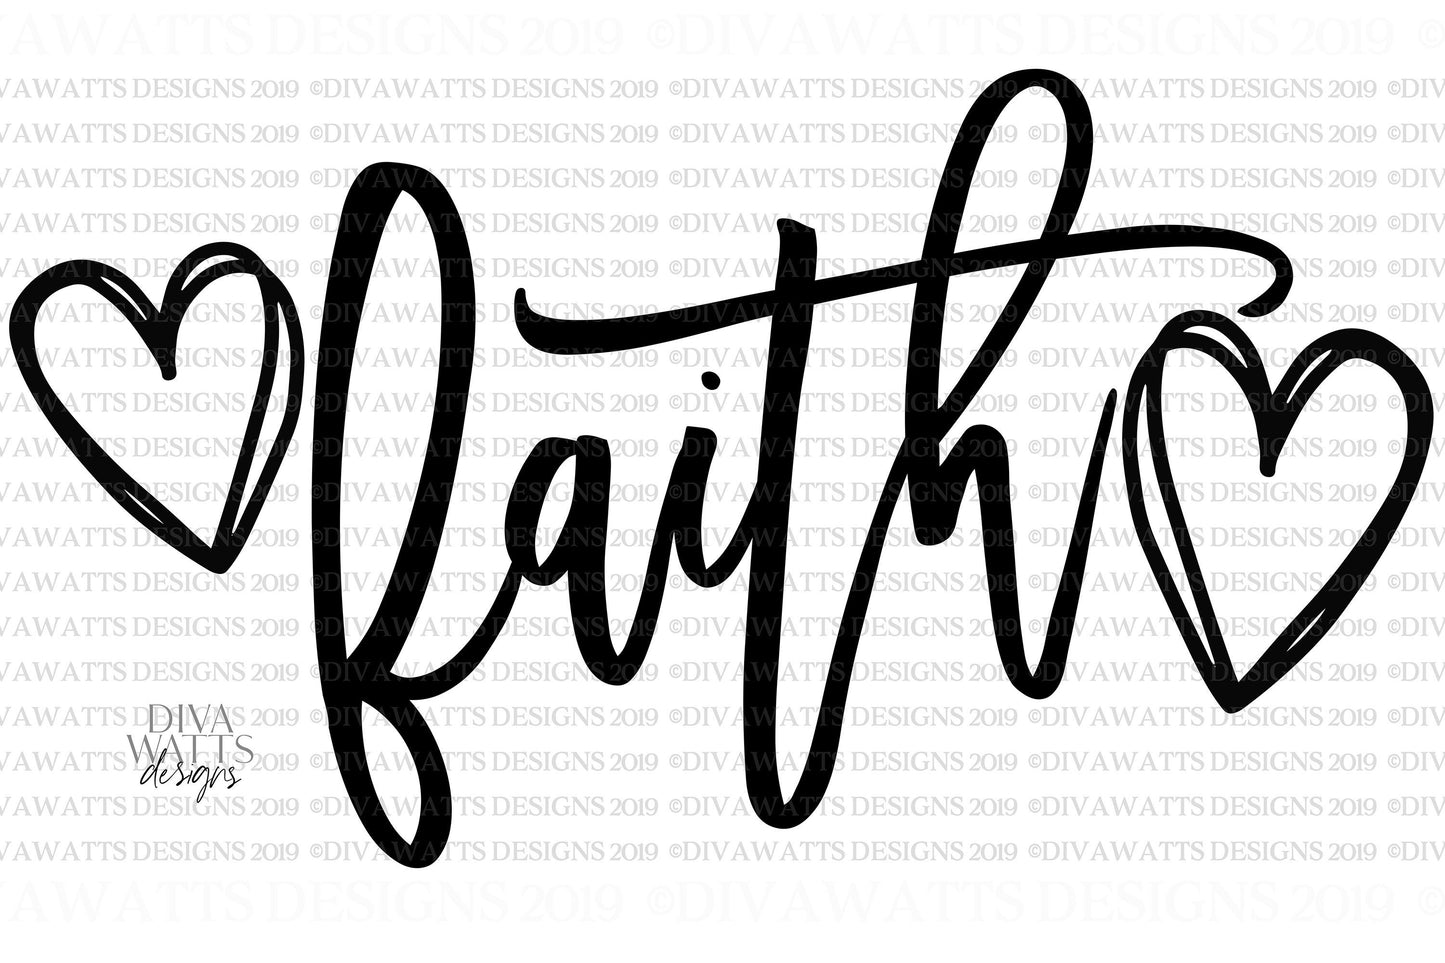 SVG | Faith | Cutting File | Doodle Hearts | Vinyl Stencil HTV | png eps jpg pdf | Printable | Shirt Sign Pillow | Christian Religion Easter